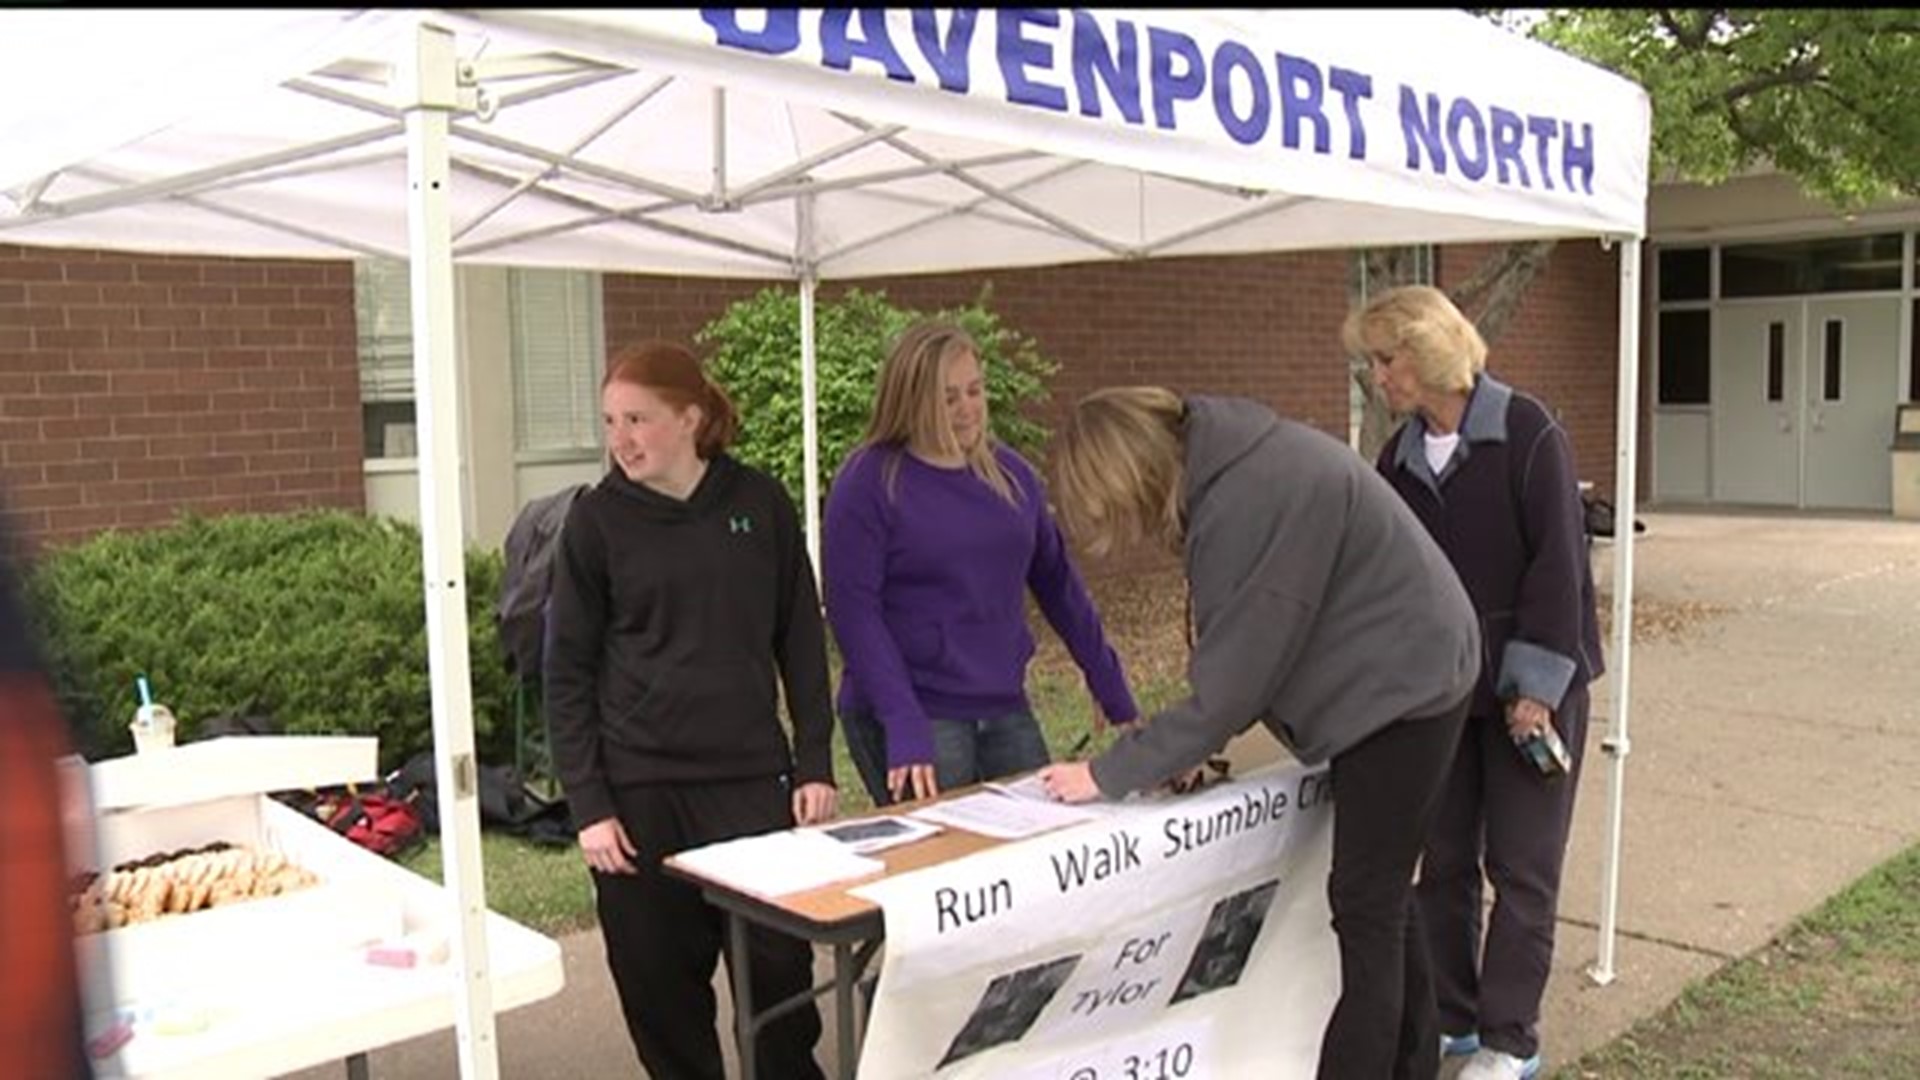 Davenport North organizes annual run, walk to help classmate